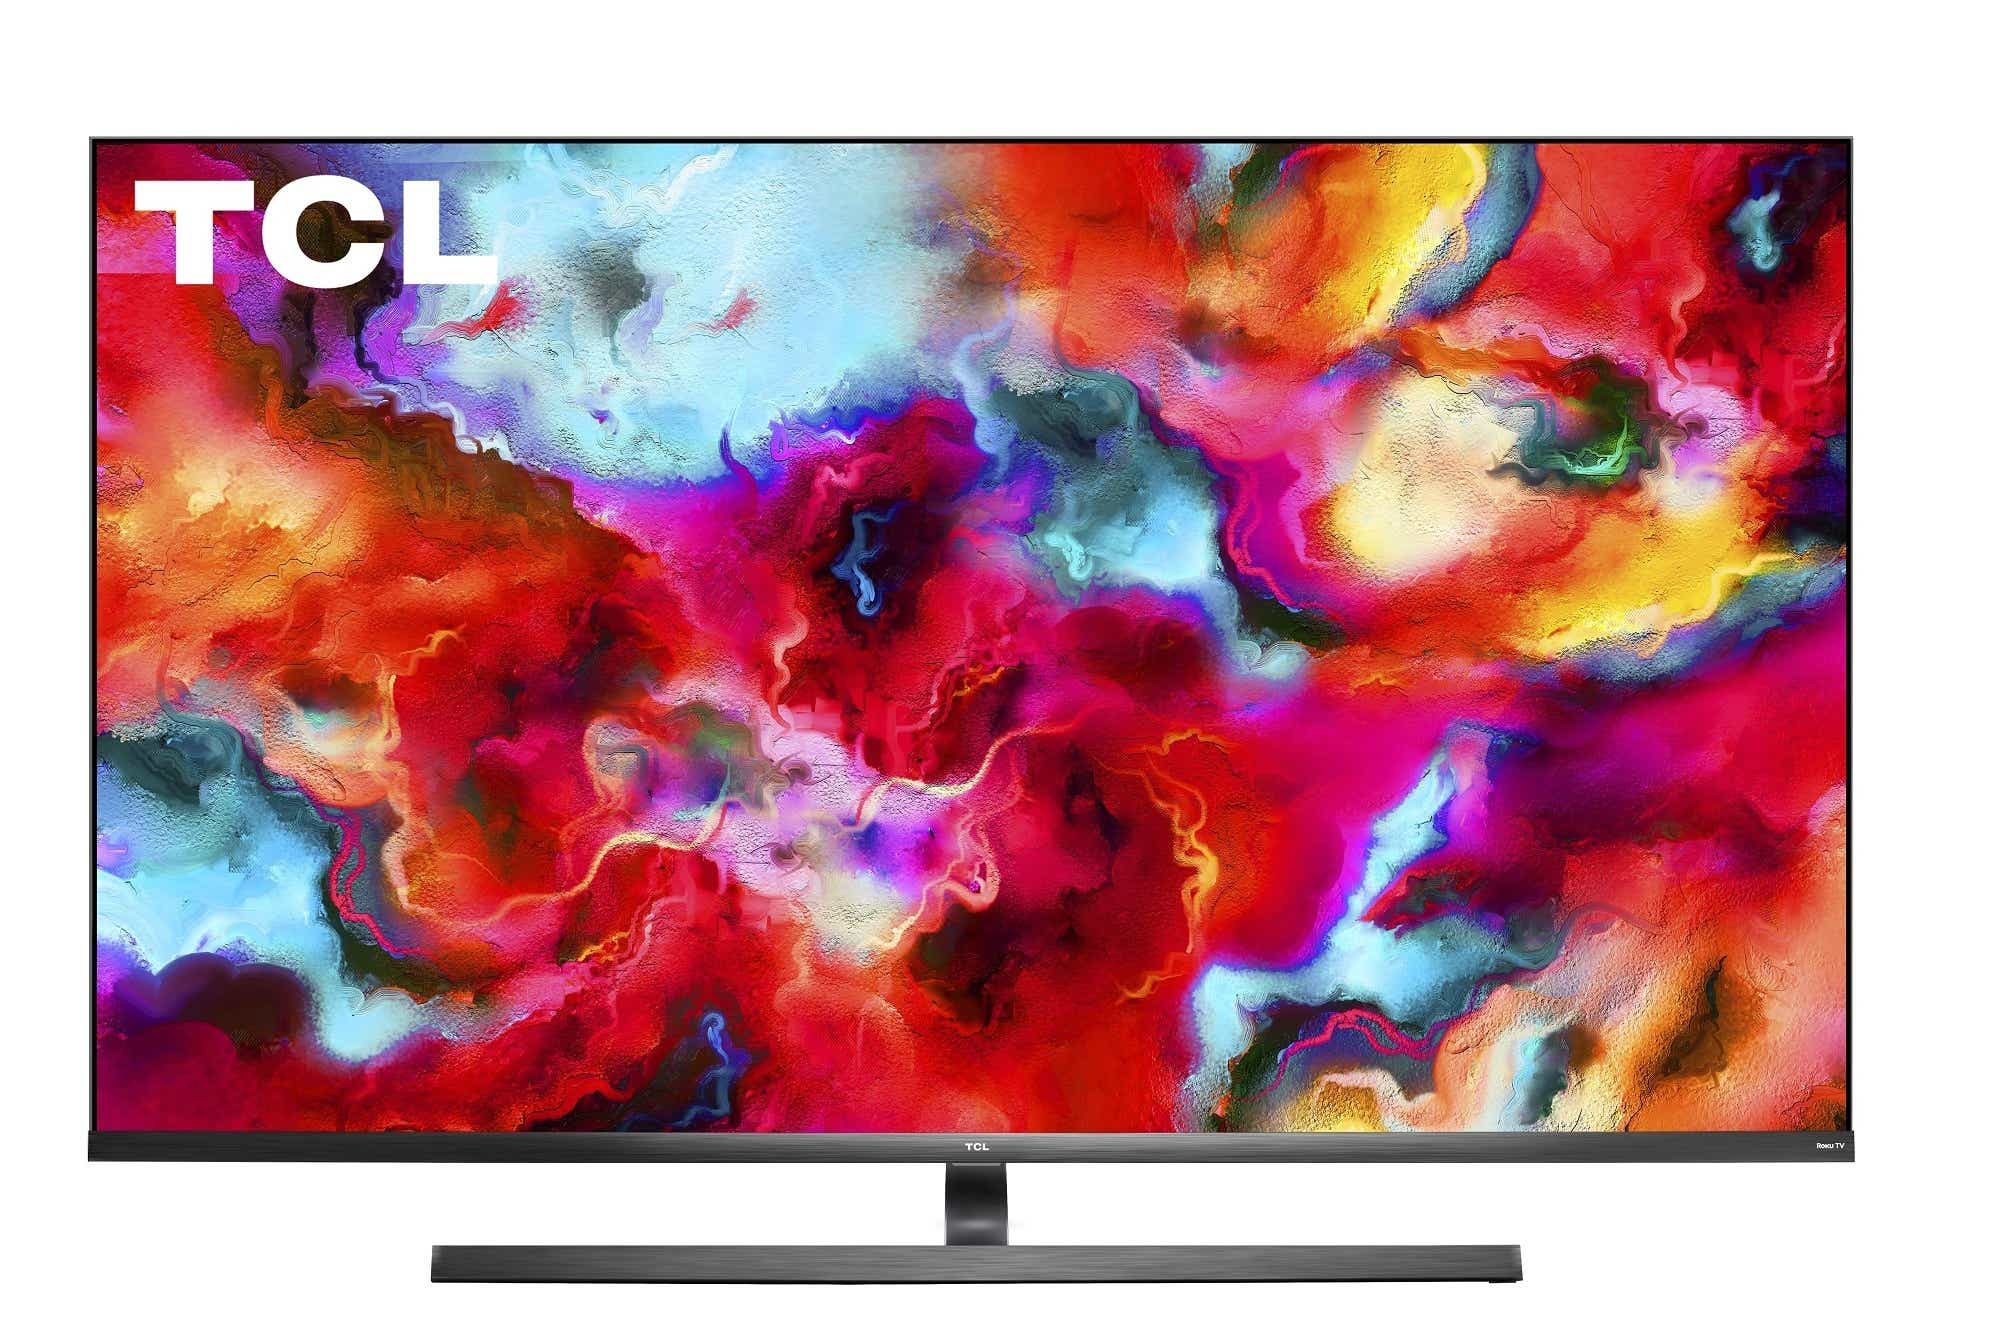 TCL 8-series 4K UHD LCD TV (65-inch class, model 65Q825)